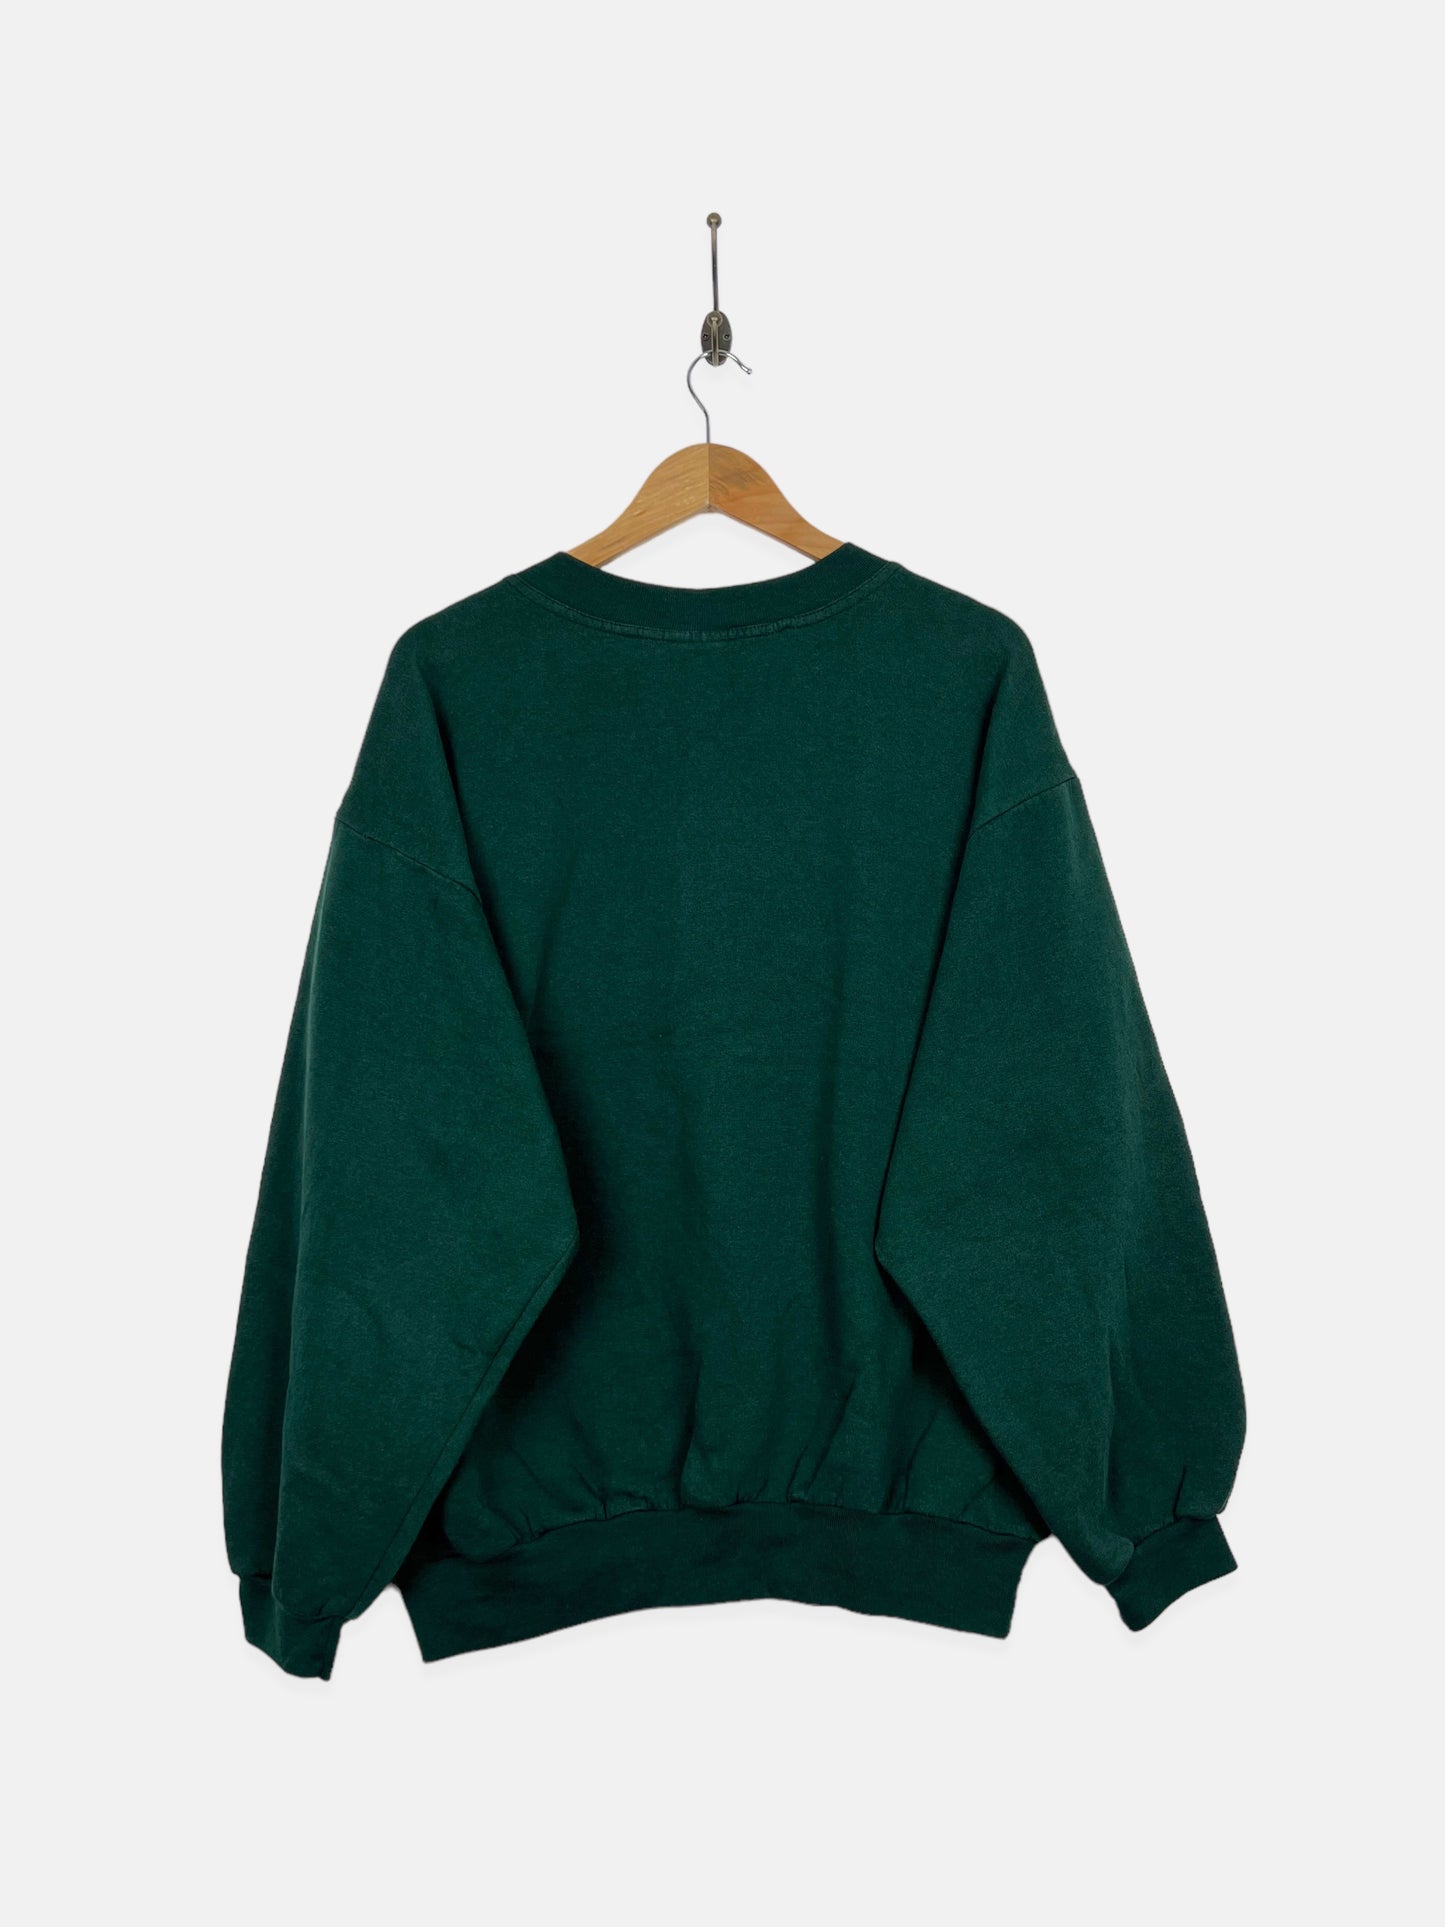 90's Australia Made Embroidered Vintage Sweatshirt Size L-XL